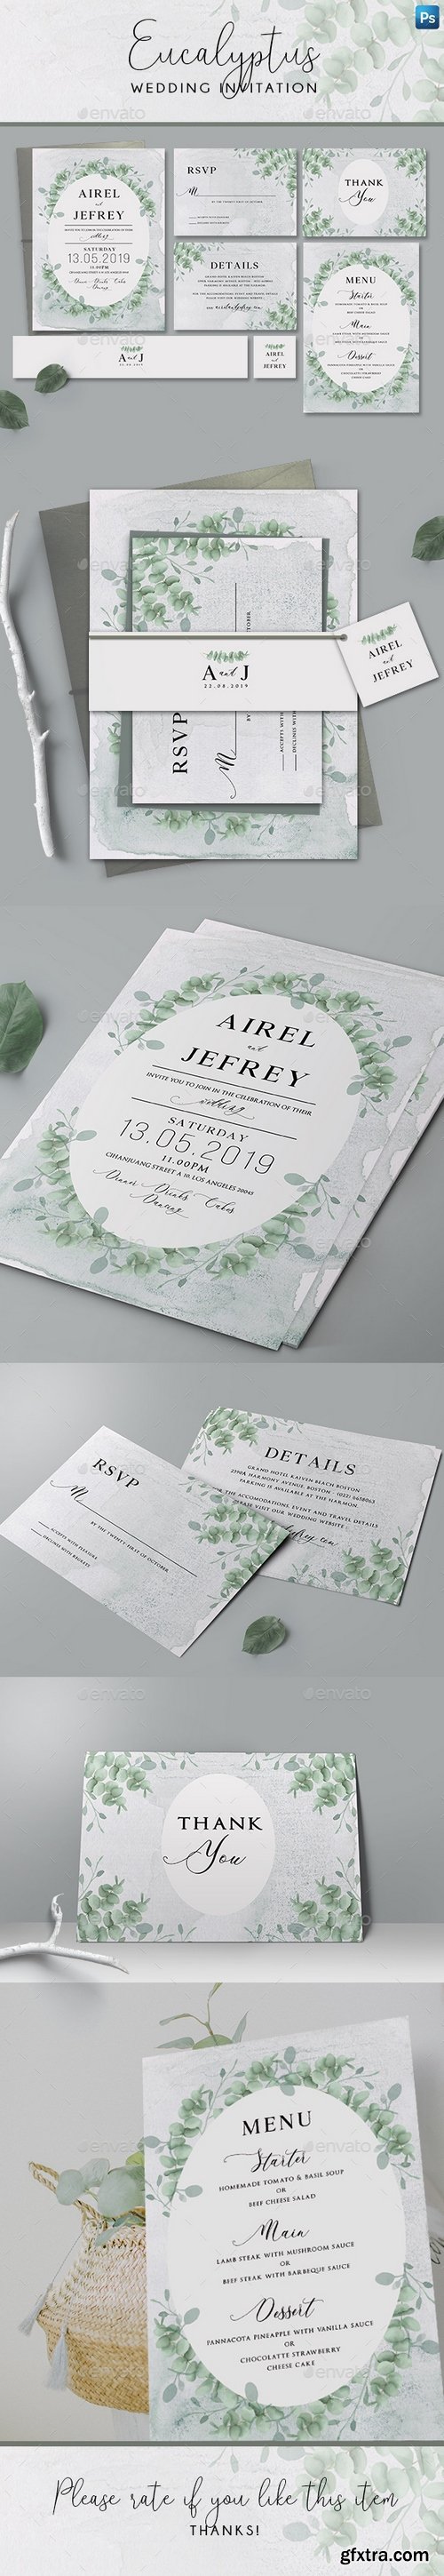 Graphicriver - Eucalyptus Wedding Invitation 22386017